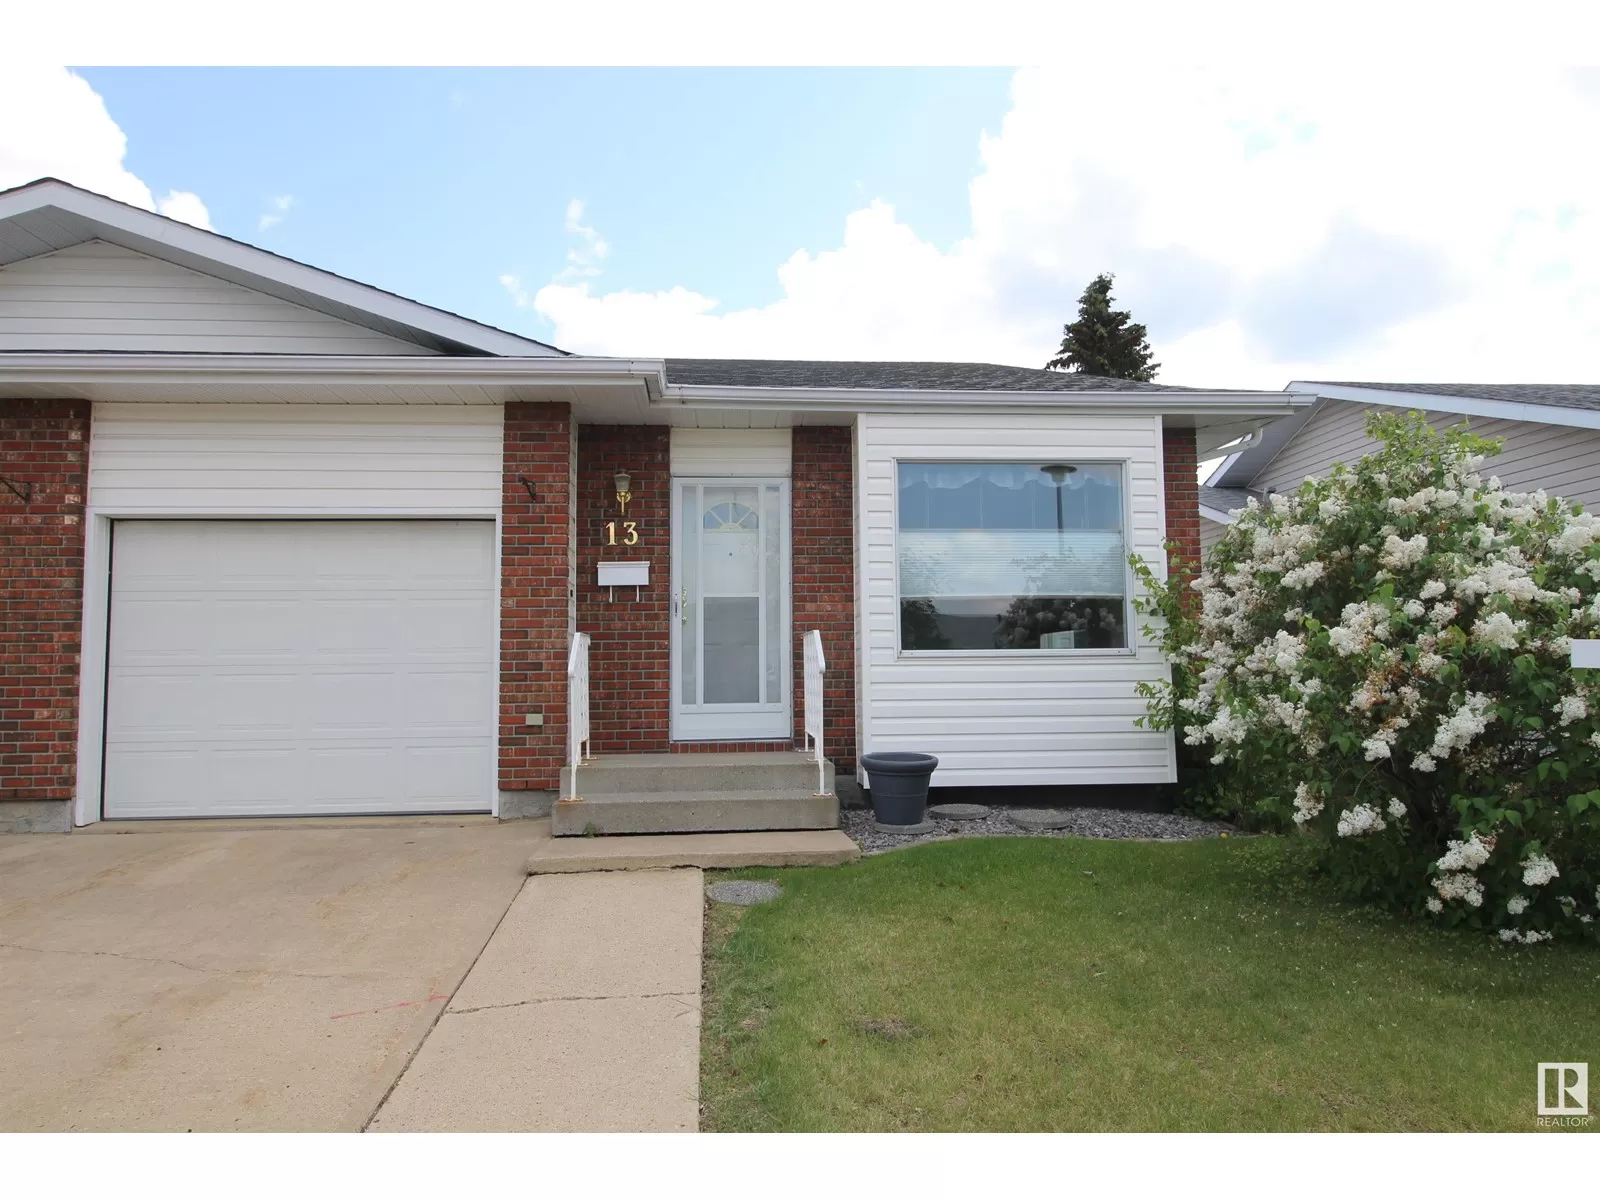 Duplex for rent: #13, 11015 105 Av, Westlock, Alberta T7P 1A1